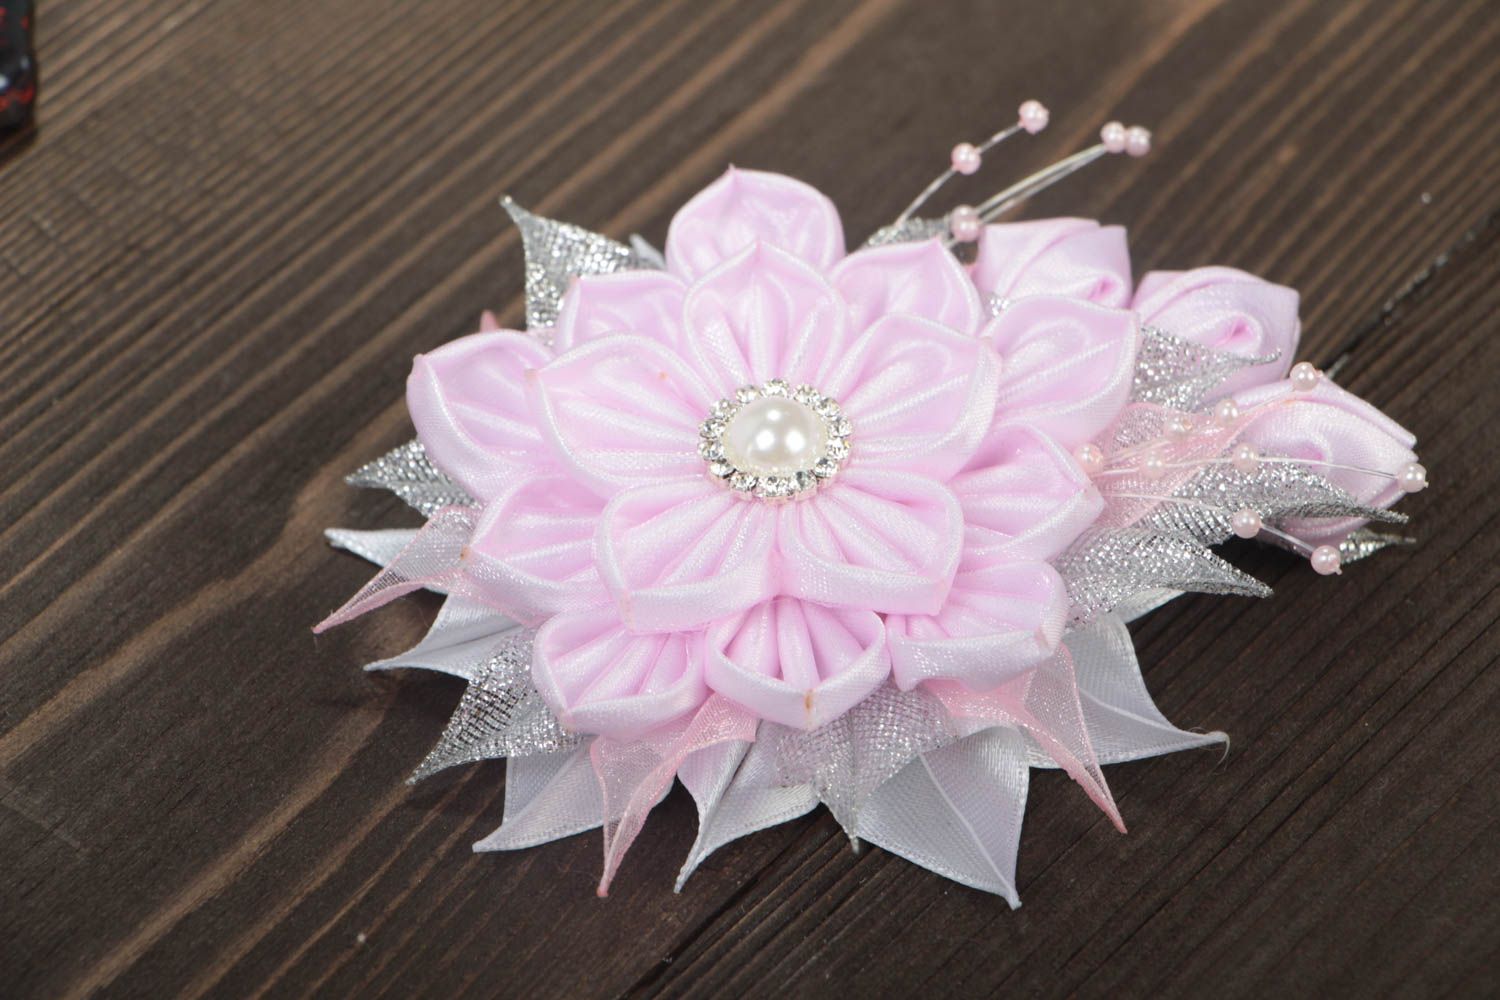 Gentle handmade flower brooch textile floristry fashion accessories gift ideas photo 1